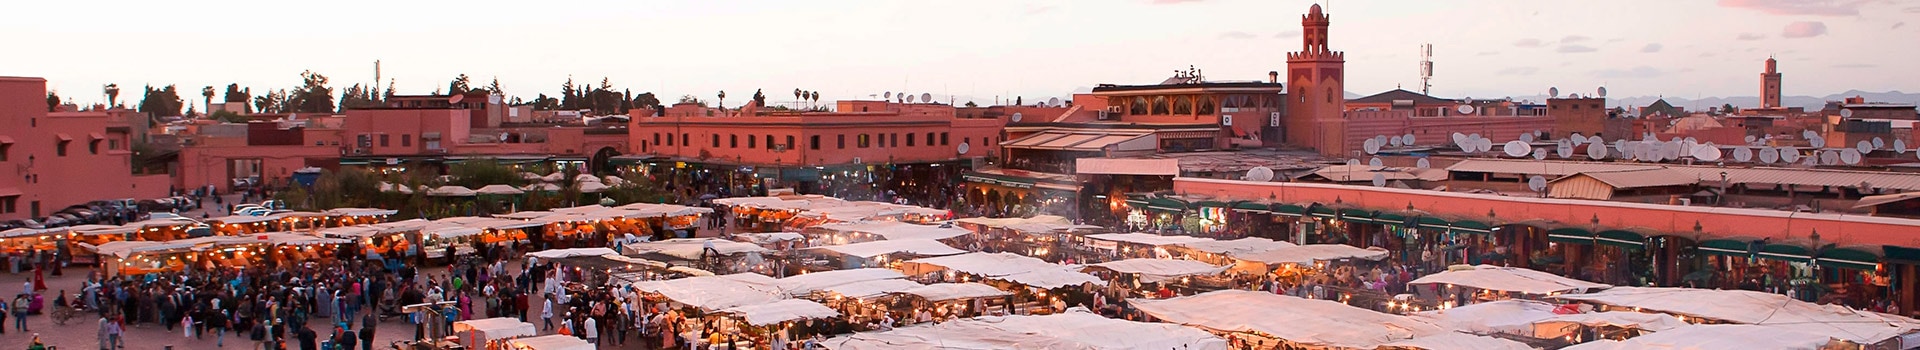 Madrid - Marrakech